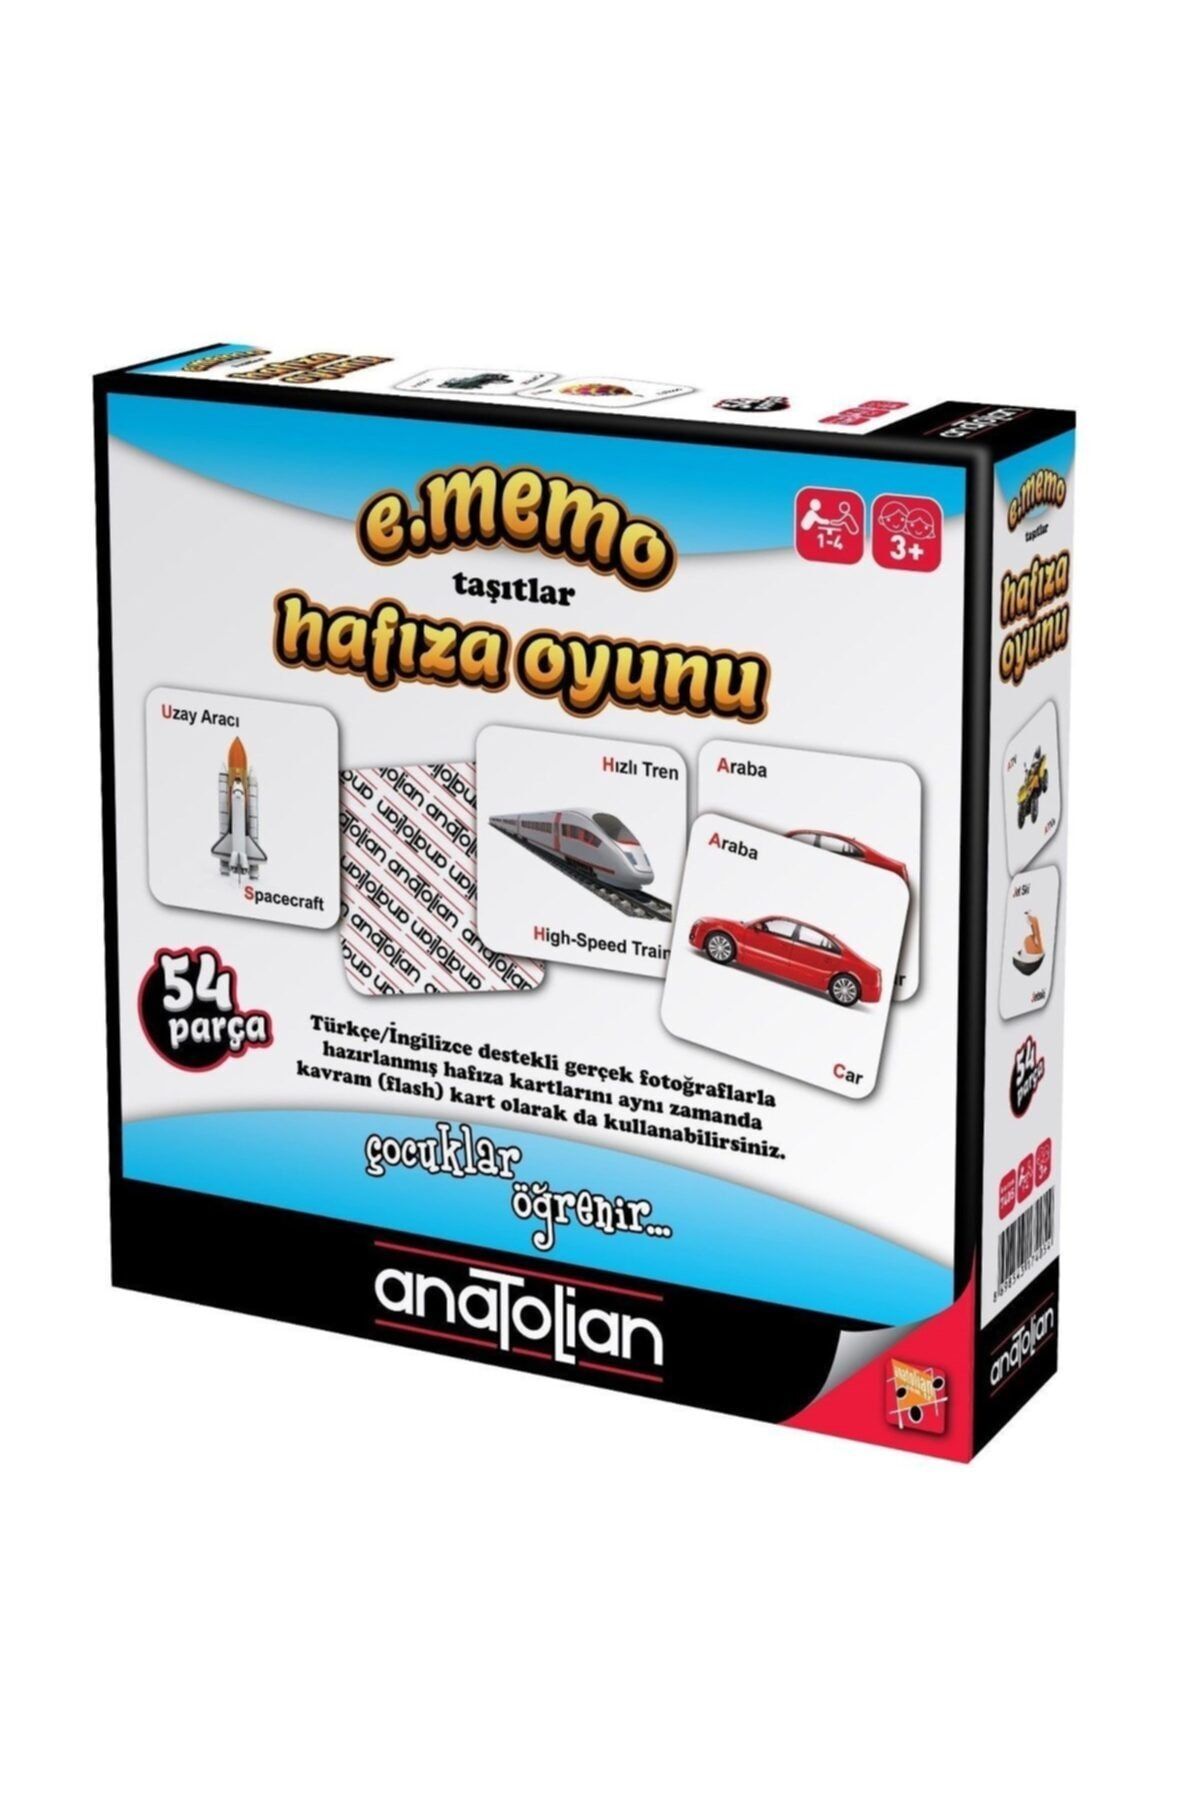 Genel Markalar Marka: Anatolian Puzzle 7405 Anatolian, E.memo Hafıza Oyunu - Taşıtlar / +3 Yaş Kategori: Spor Oyun